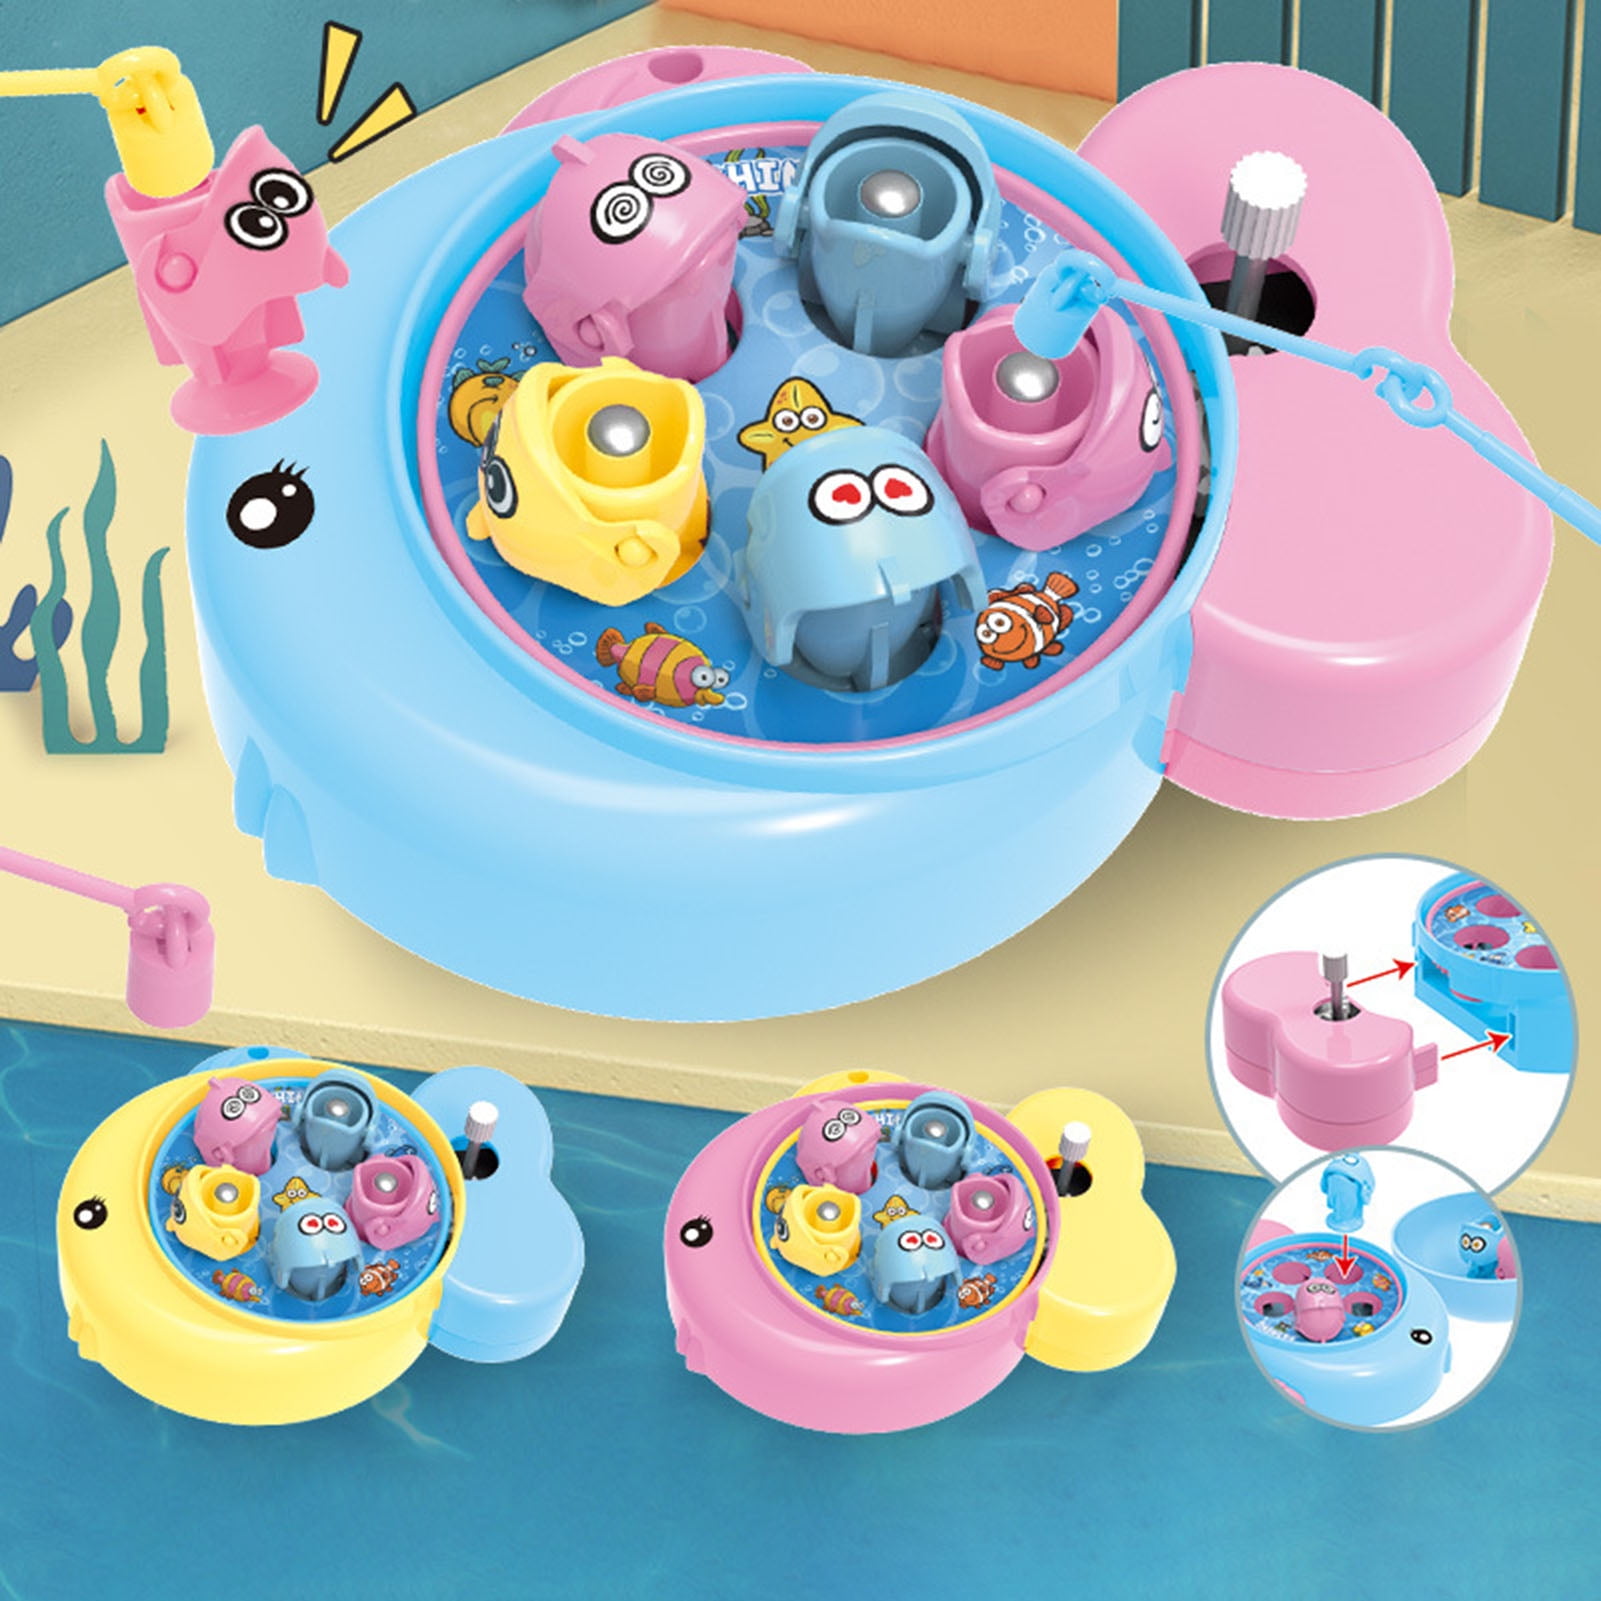 LOYUEGIYO Baby Bath Toys,Magnet Fishing Game Bath Kuwait